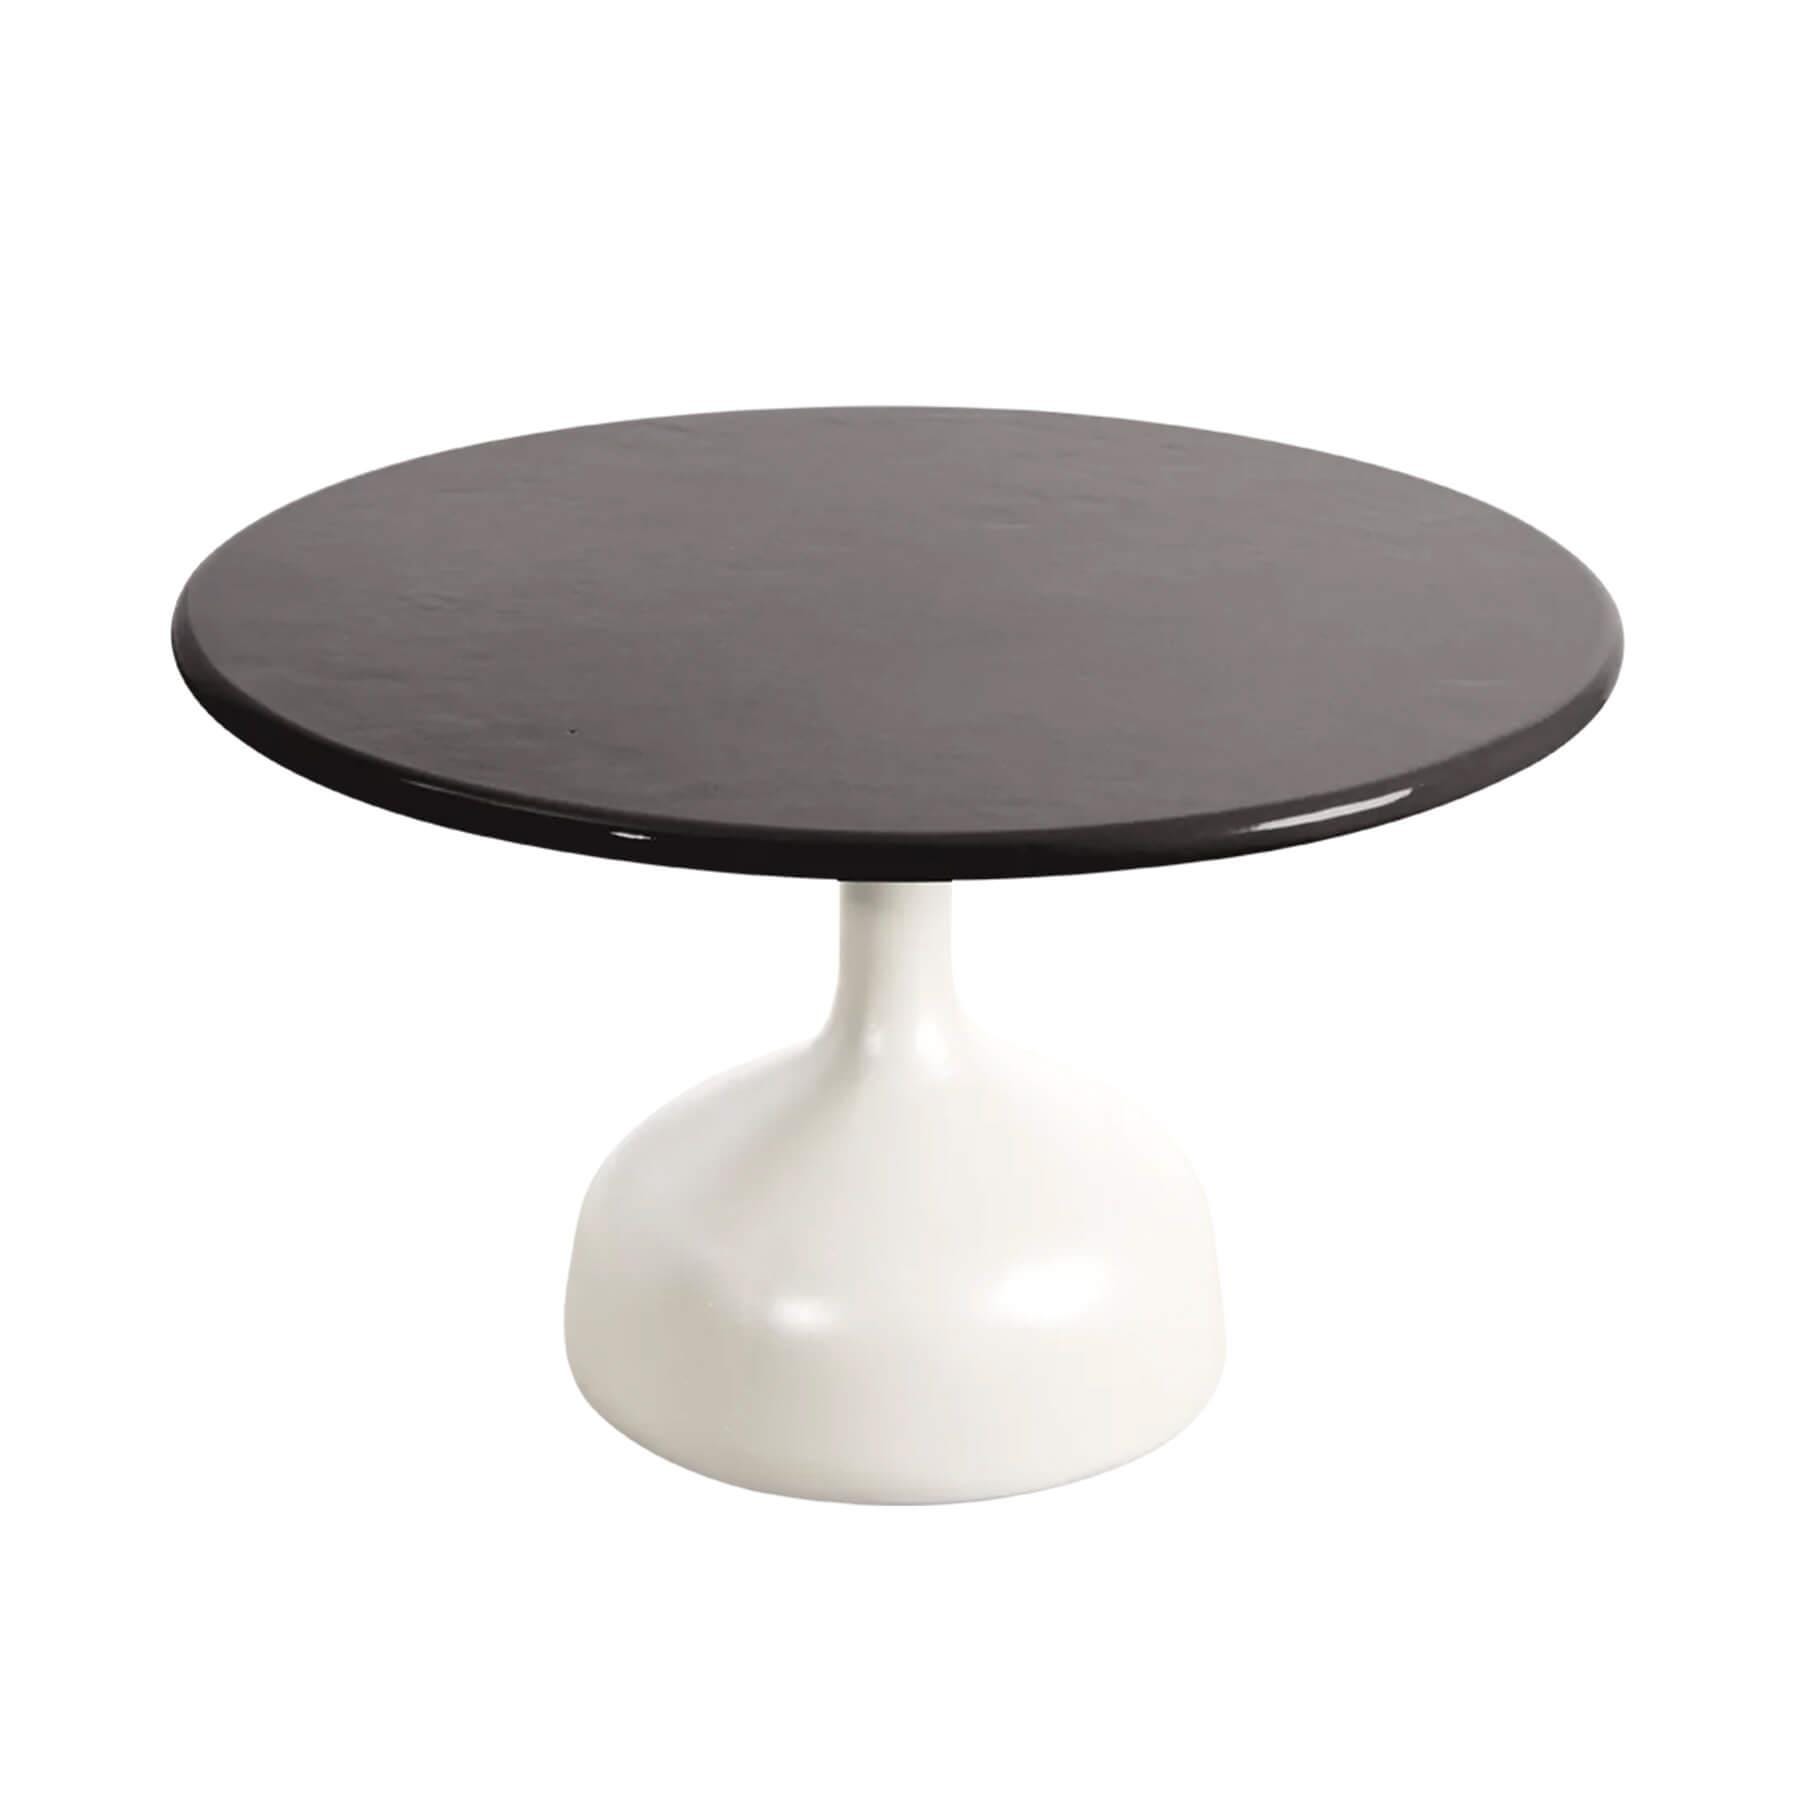 Caneline Glaze Coffee Table Large Sand Base Black Lava Stone Top Designer Furniture From Holloways Of Ludlow